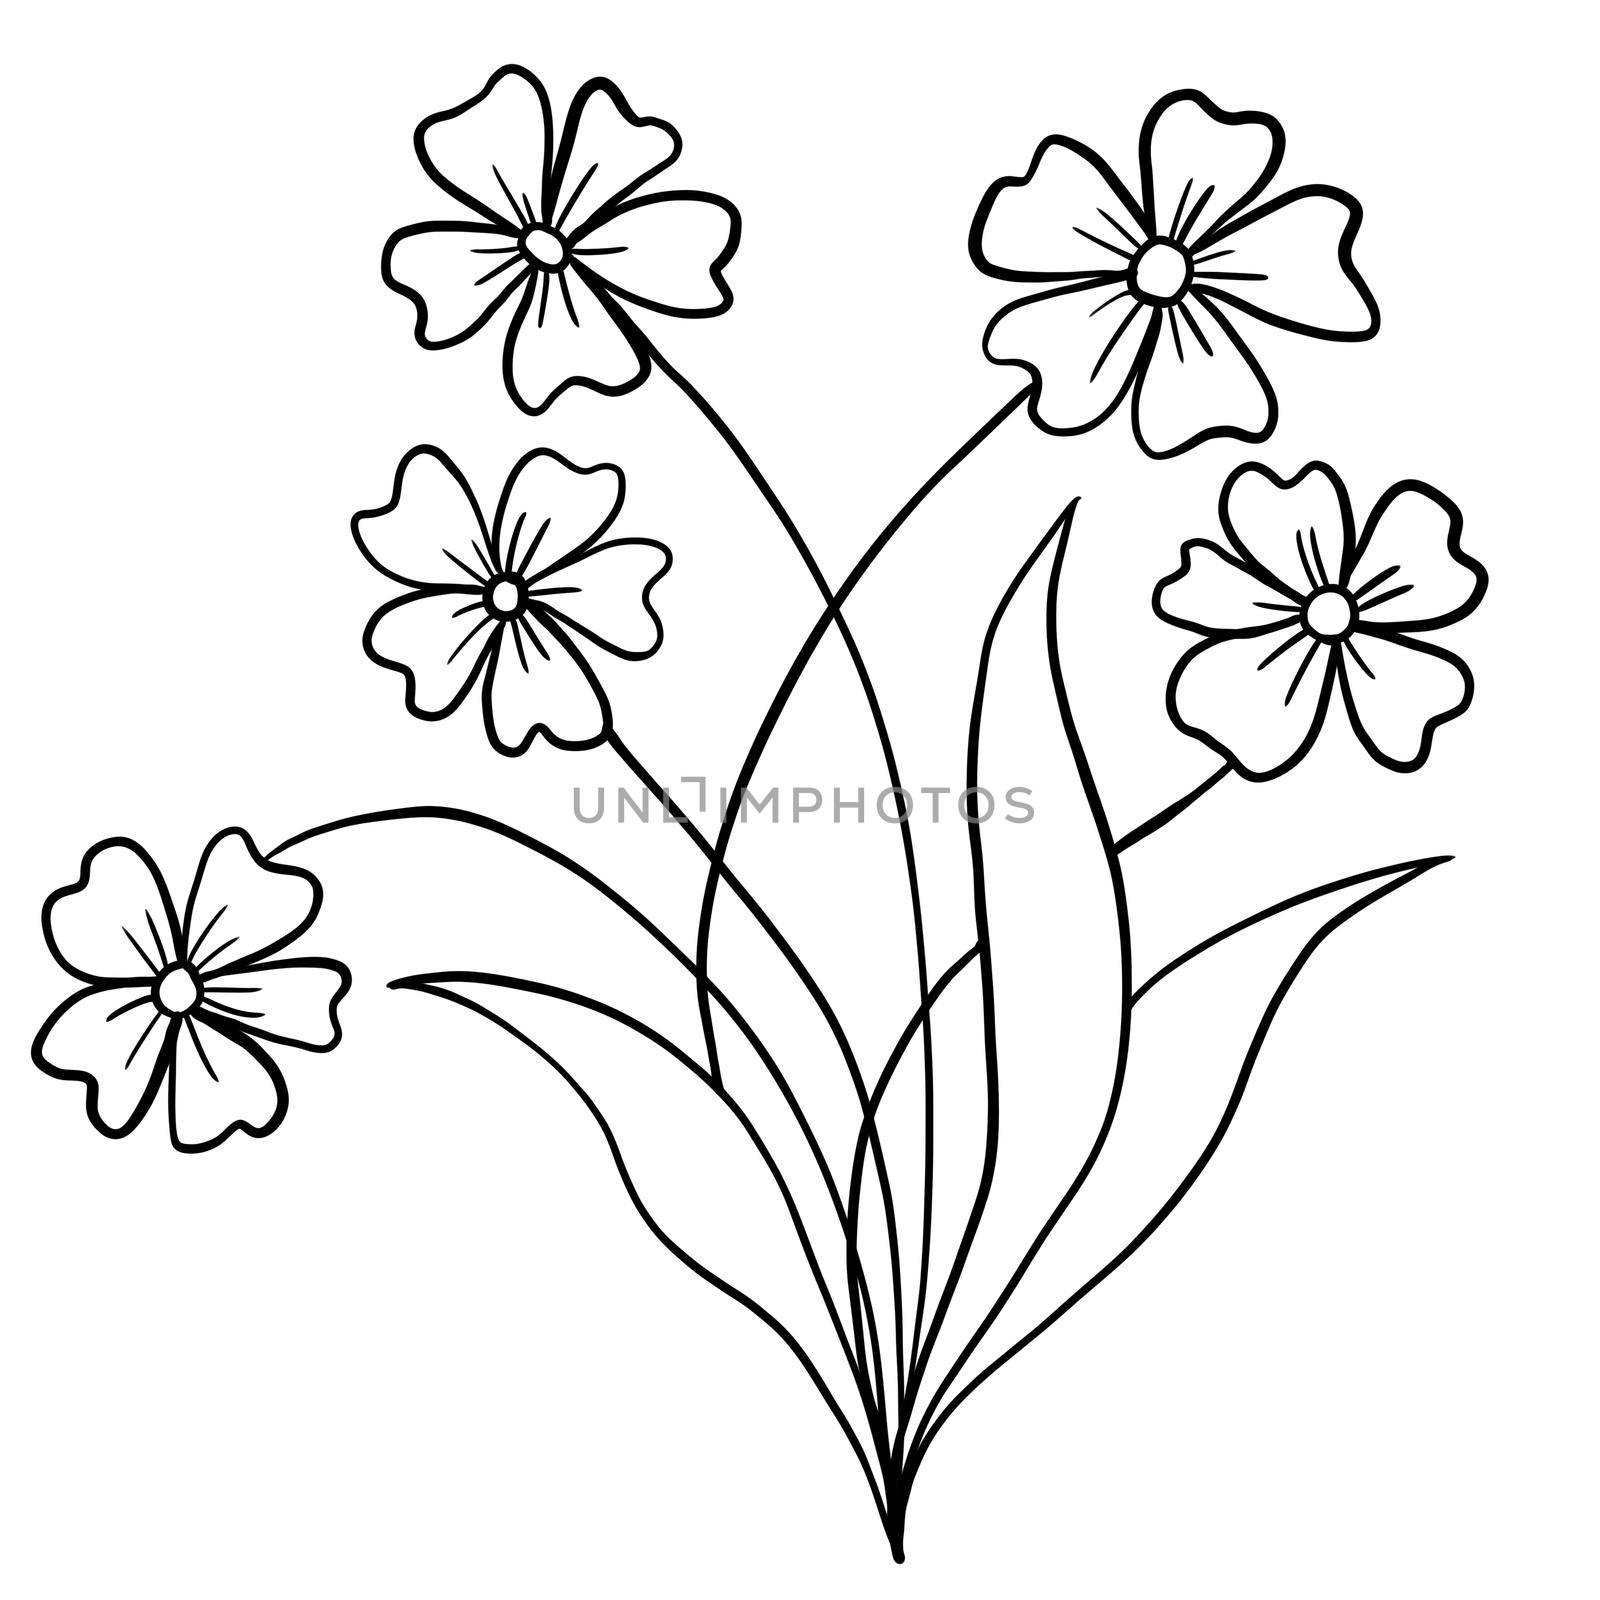 Hand drawn floral flower leaves illustration, black white elegant wedding ornament, Line art minimalism tatoo style design summer spring nature branch foliage blossom